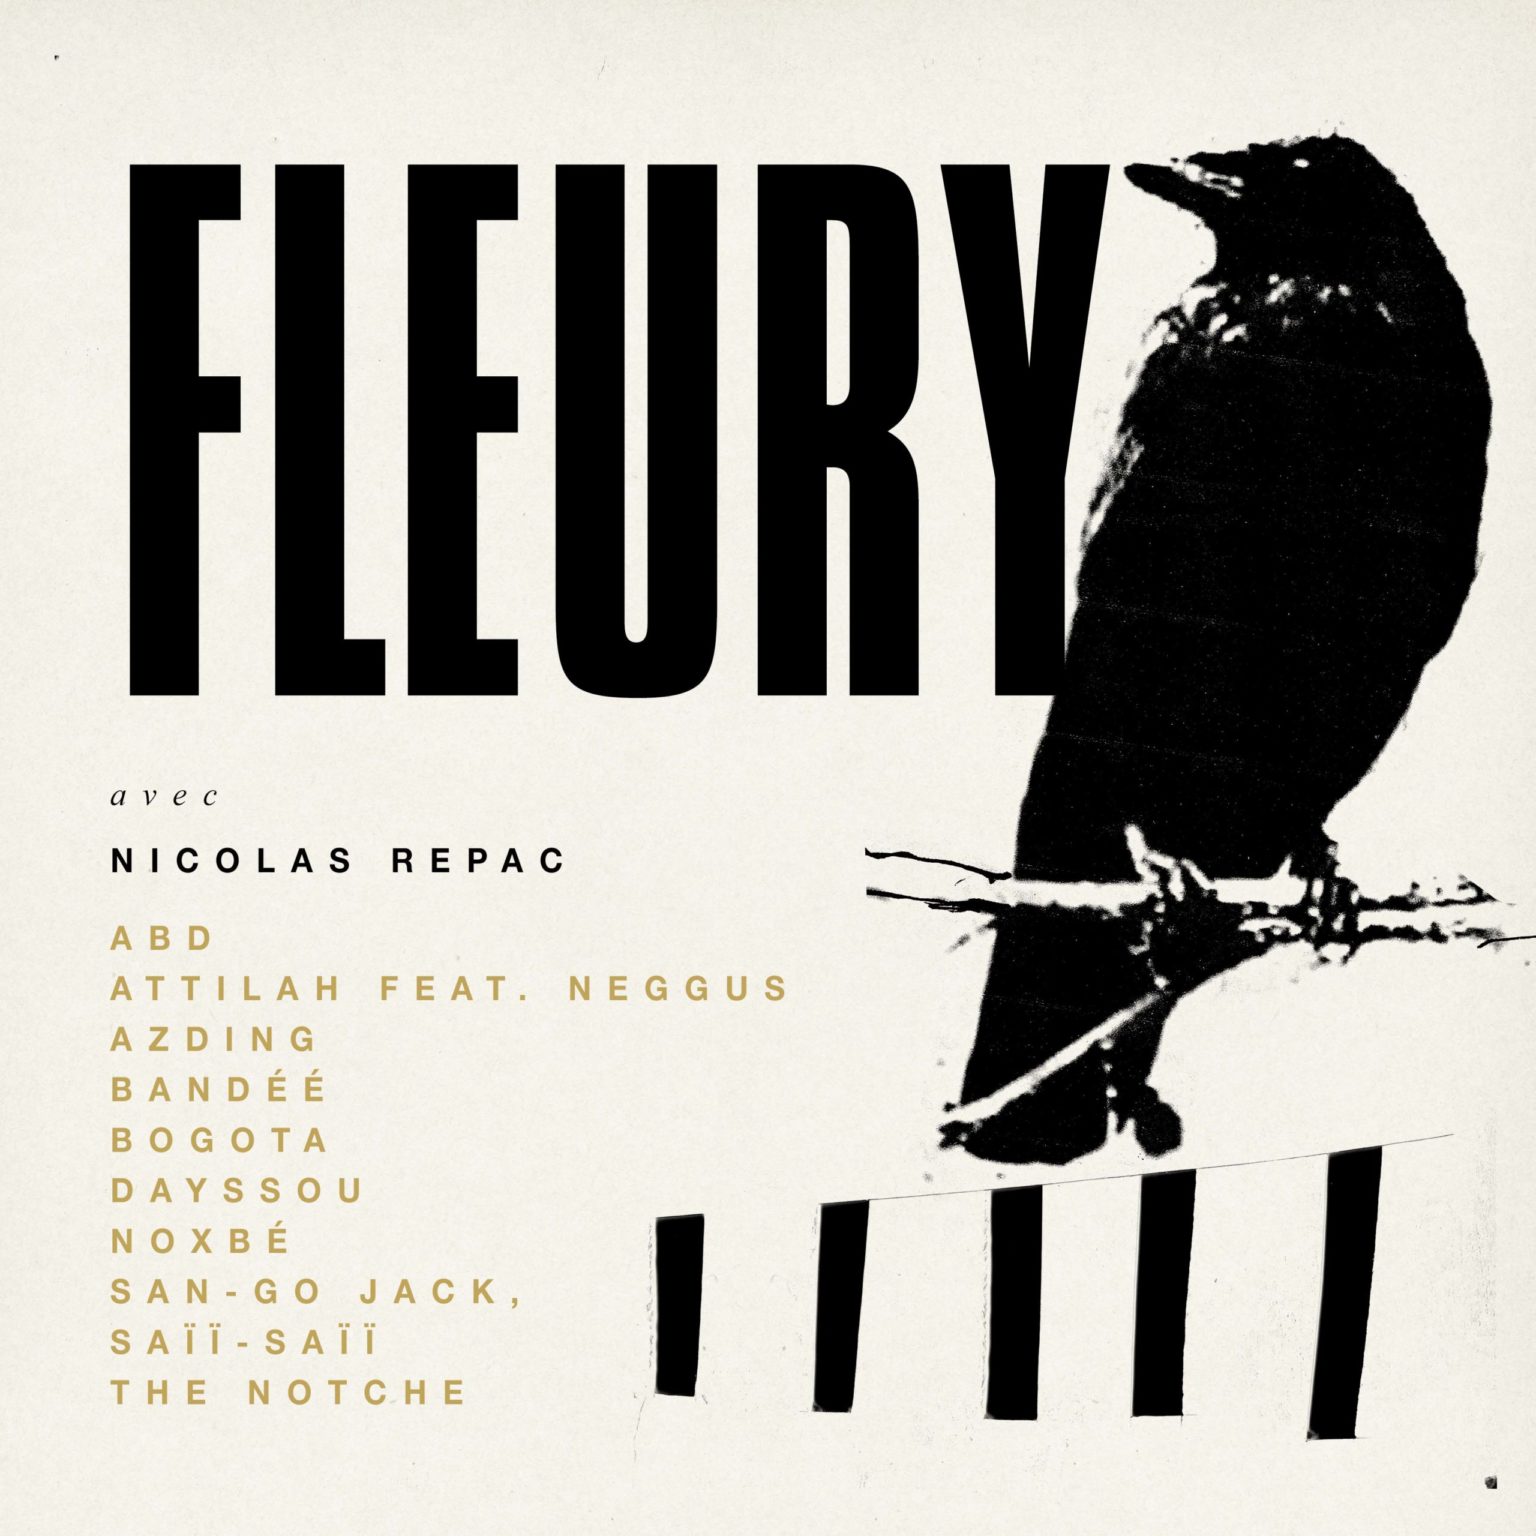 Fleury, Nicolas Repac, Collectif Fleury, Jarring Effects